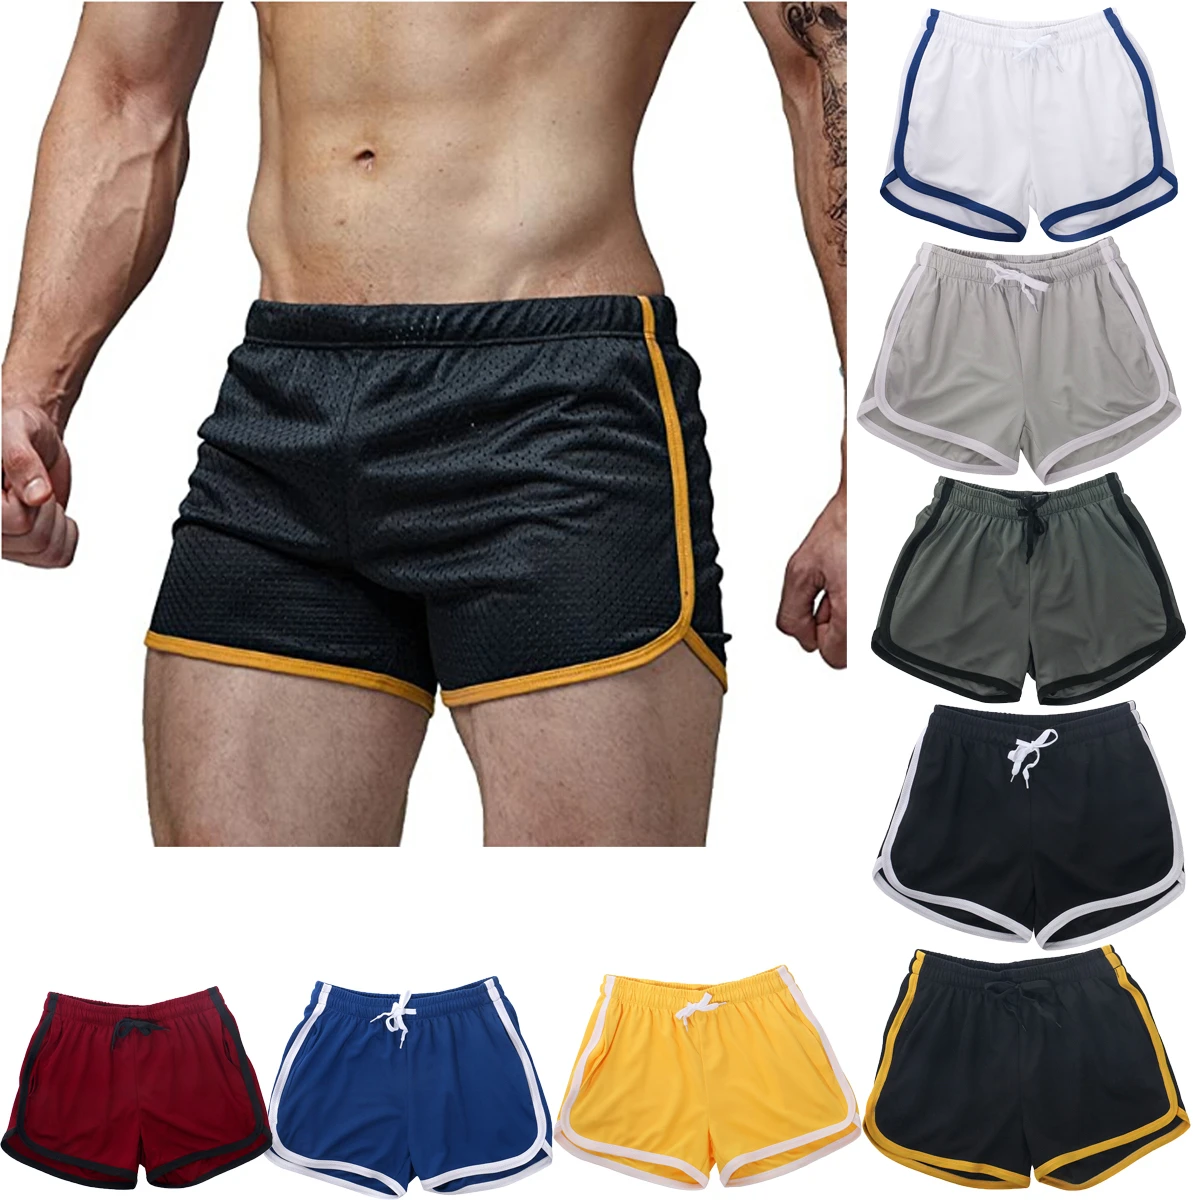 Brand New Men's Short Quick Dry Shorts Beachwear Workout Gym Sports Running Fitness 2020 Casual Elastic Drawstring Mesh Shorts